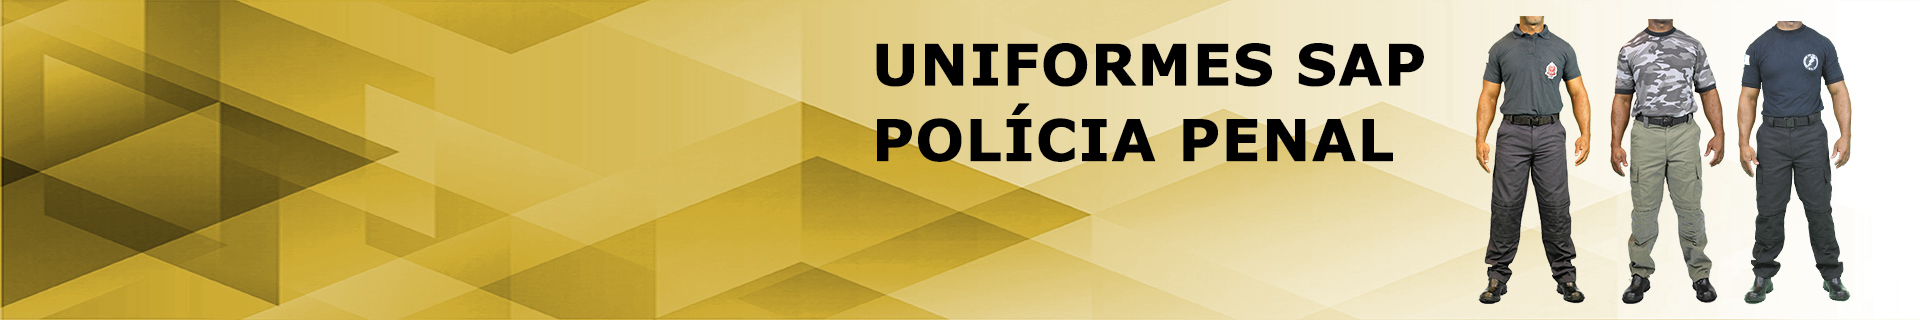 UNIFORMES SAP – POLÍCIA PENAL